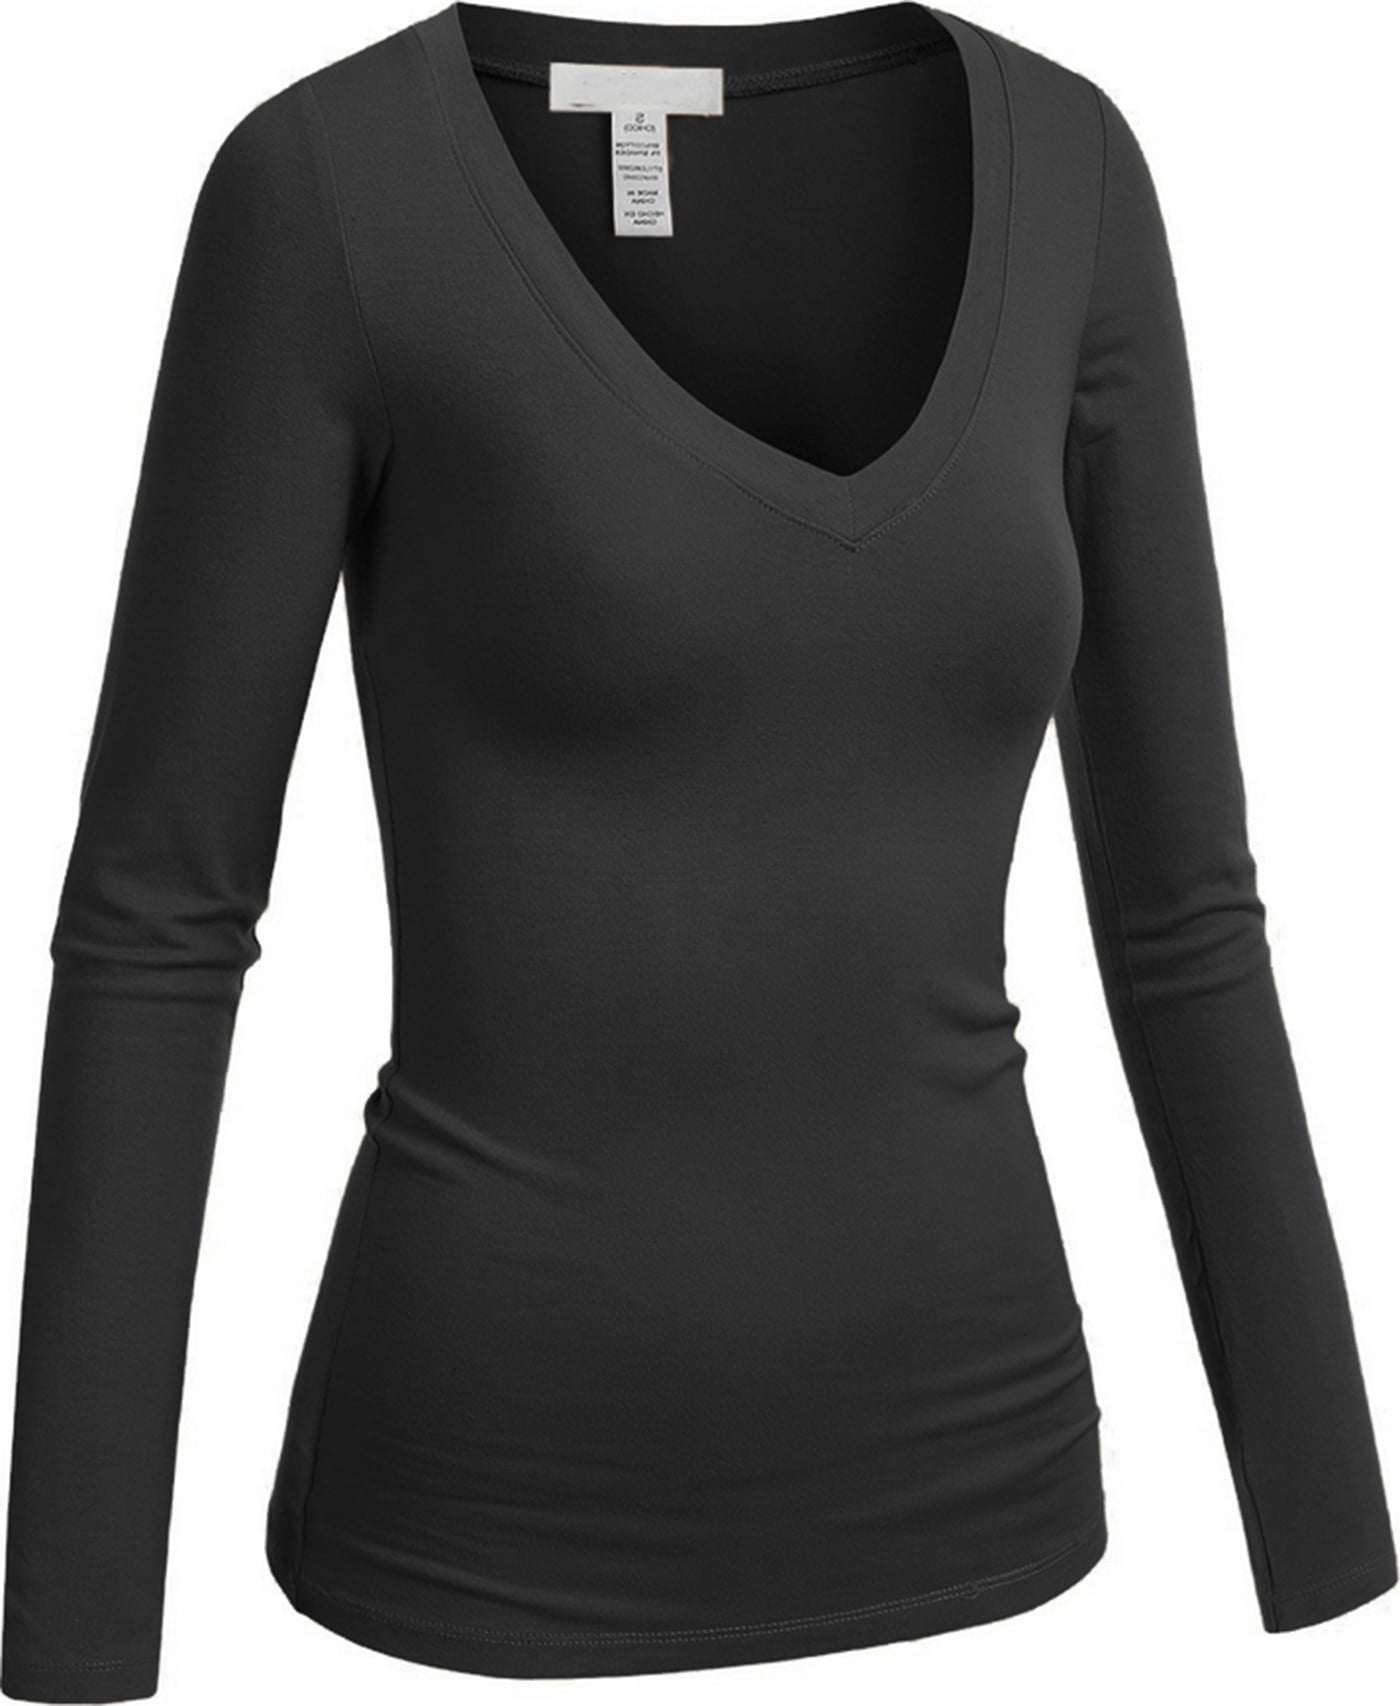 Basic Fashion Women's Long Sleeve V-Neck Tee Top Shirt - Dk Gray, Small ...